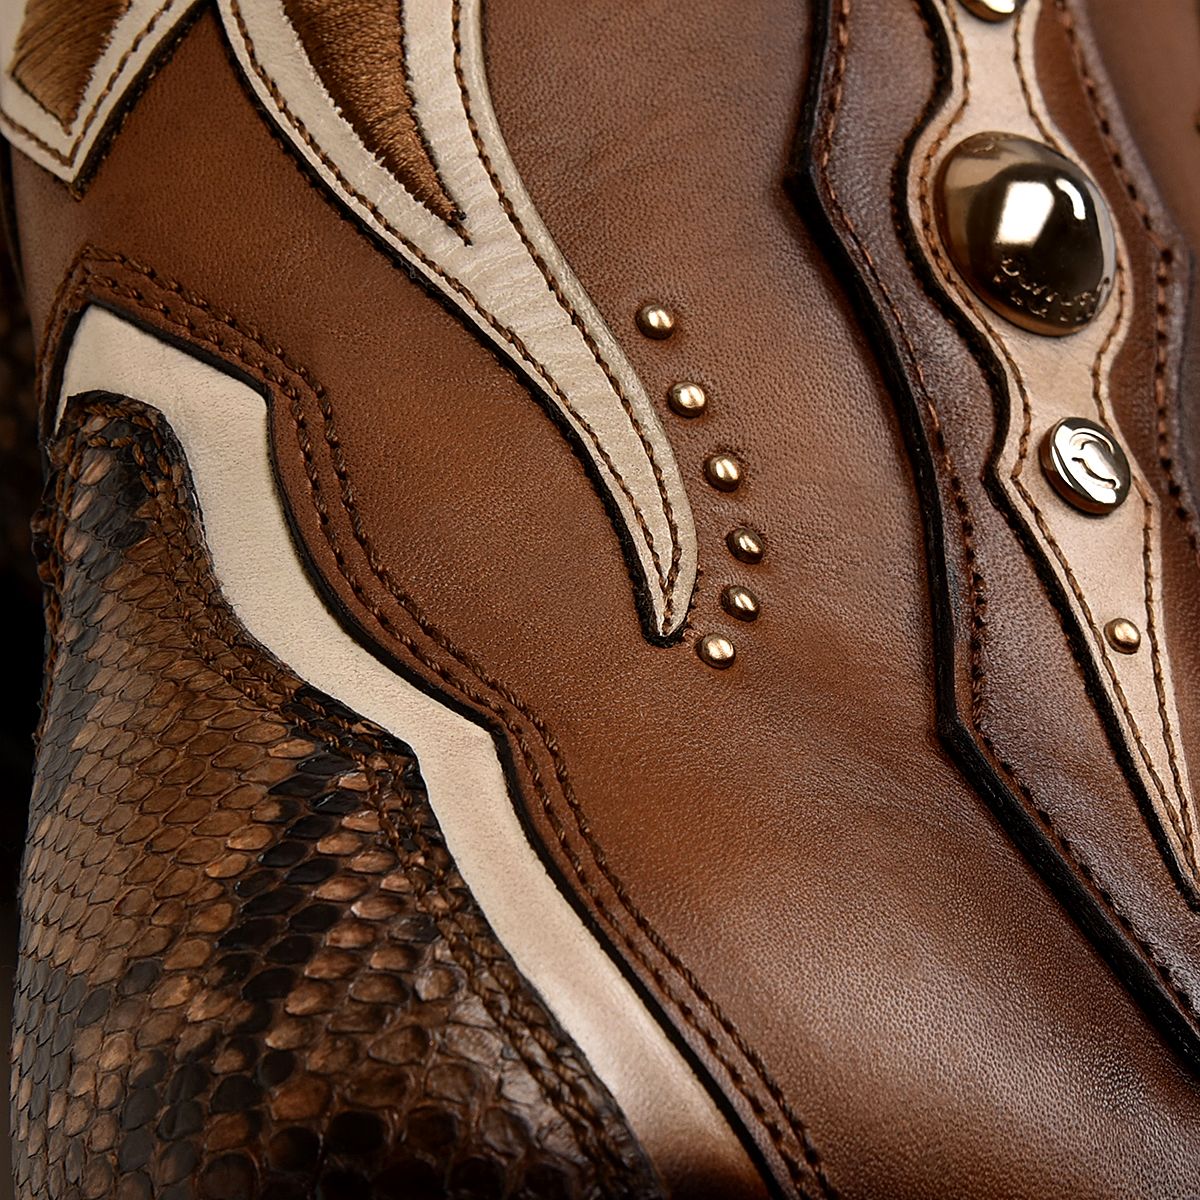 4Q06PH - Cuadra honey fashion python skin ankle boots for women-CUADRA-Kuet-Cuadra-Boots